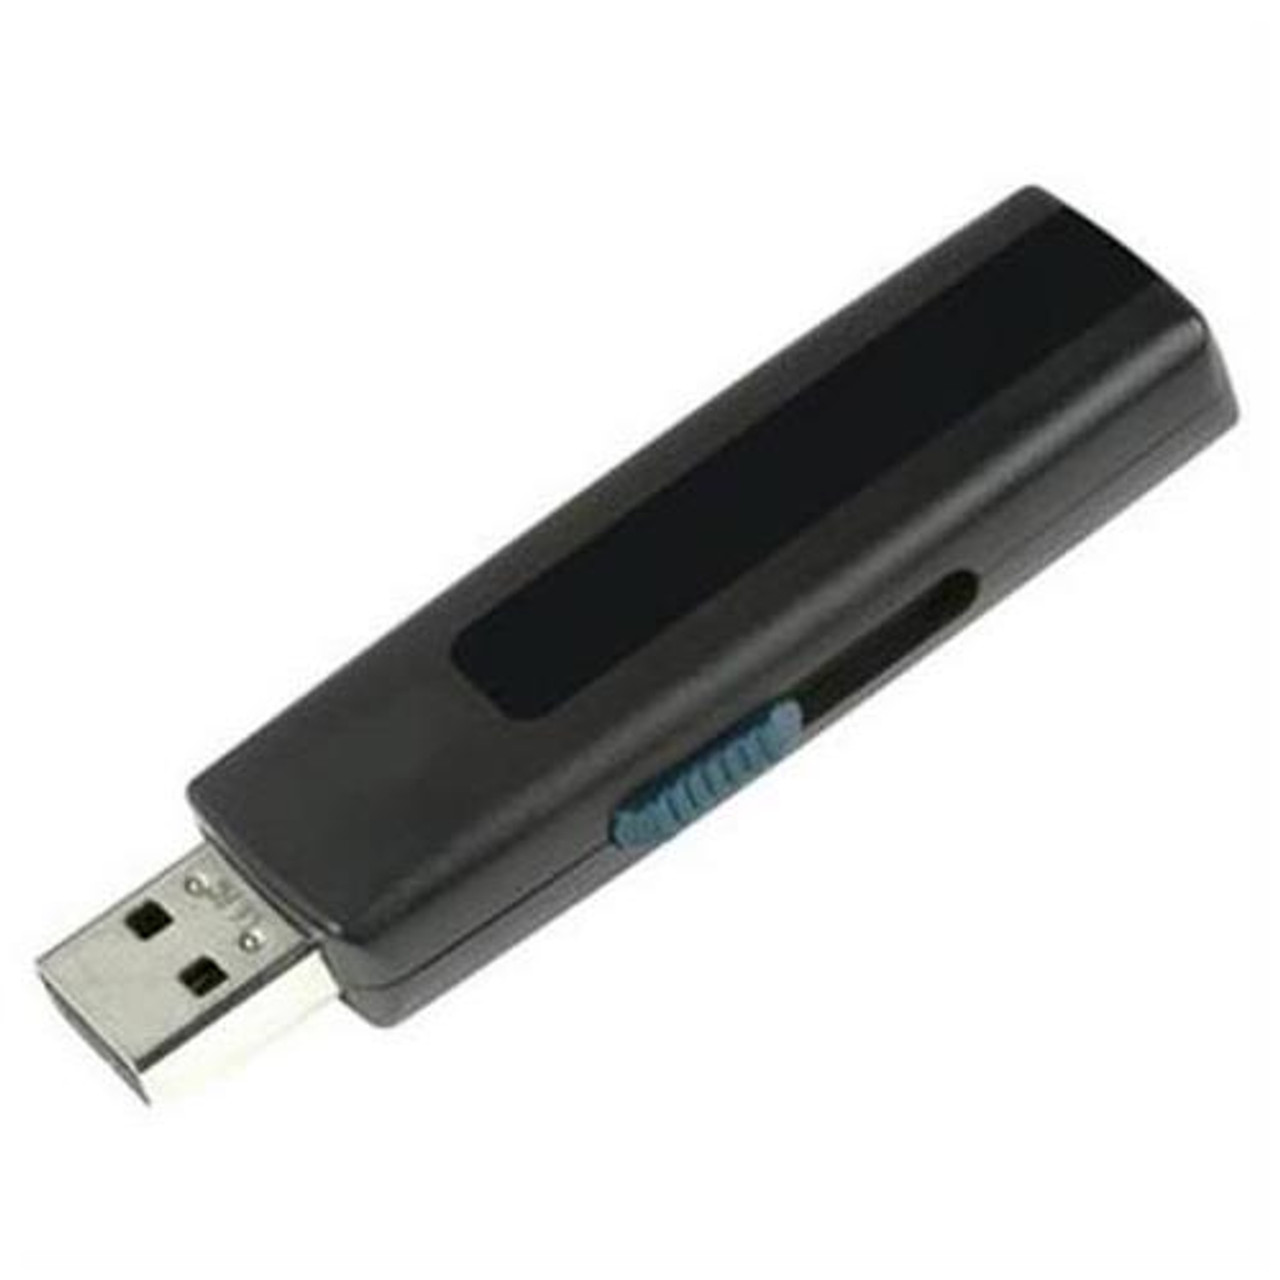 DTSE9H/16GBZCR - Kingston 16GB Datatraveler Se9 Usb 2.0 Flash Drive